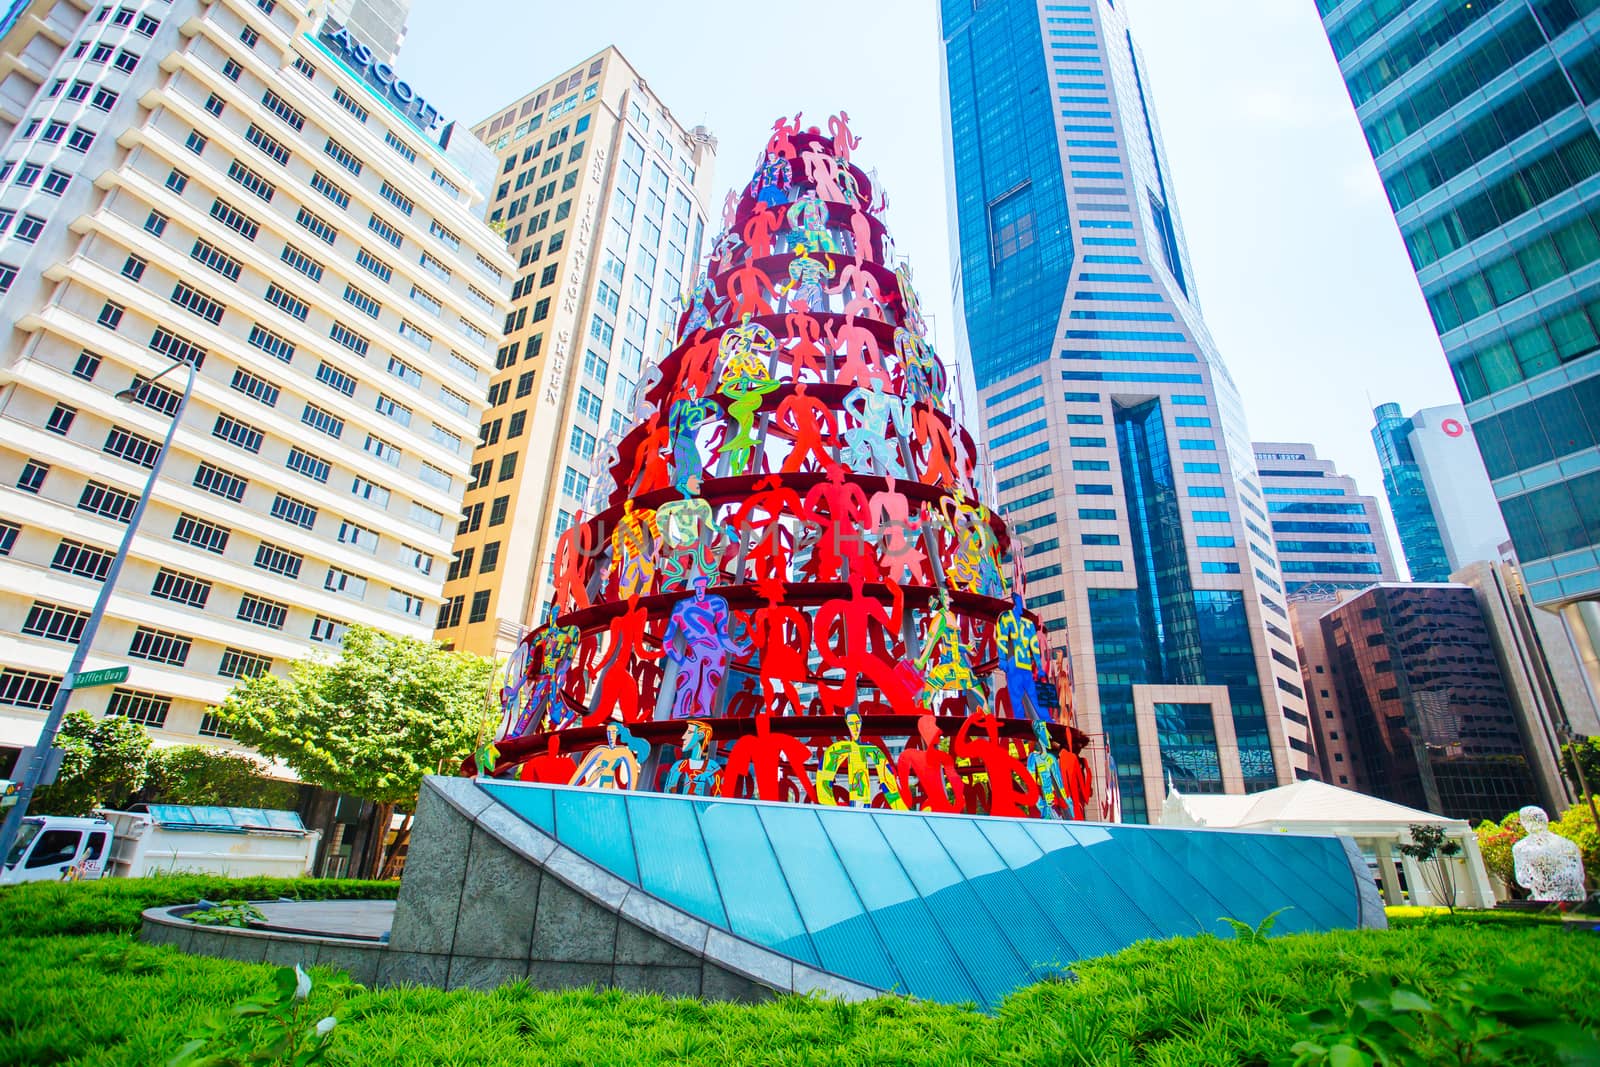 Singapore CBD, Singapore - June 21 2015: Singapore Momentum Sculpture located at the triangle traffic junction of Marina Blvd and Raffles Quay